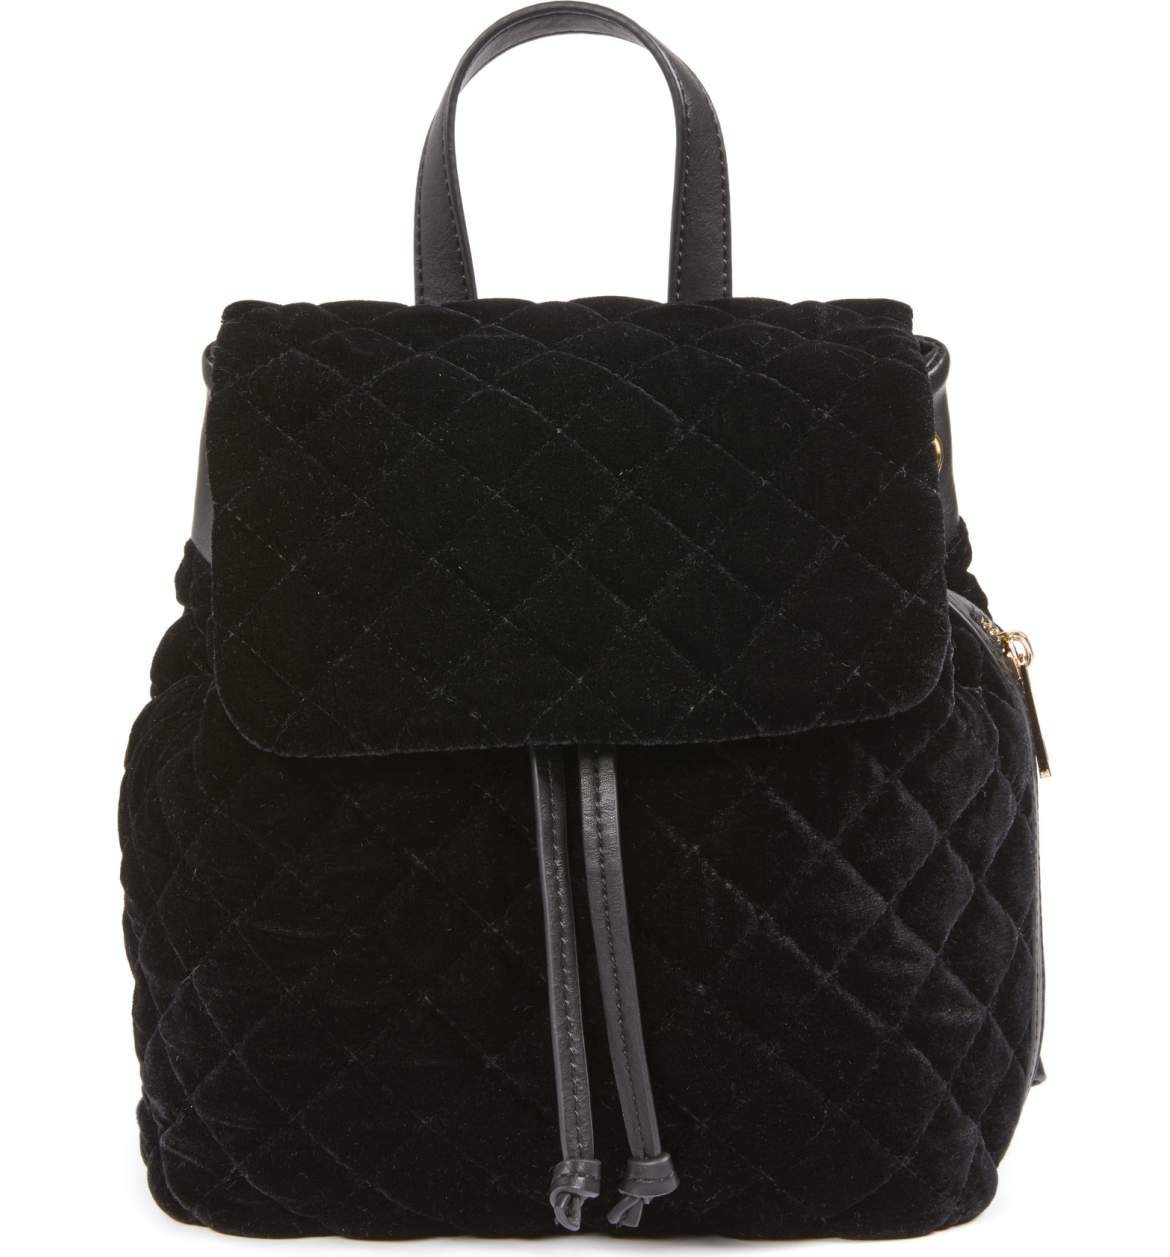 the most stylish backpacks for moms | backpacks that moms can use under $100 | the best backpacks under $100 on allweareblog.com